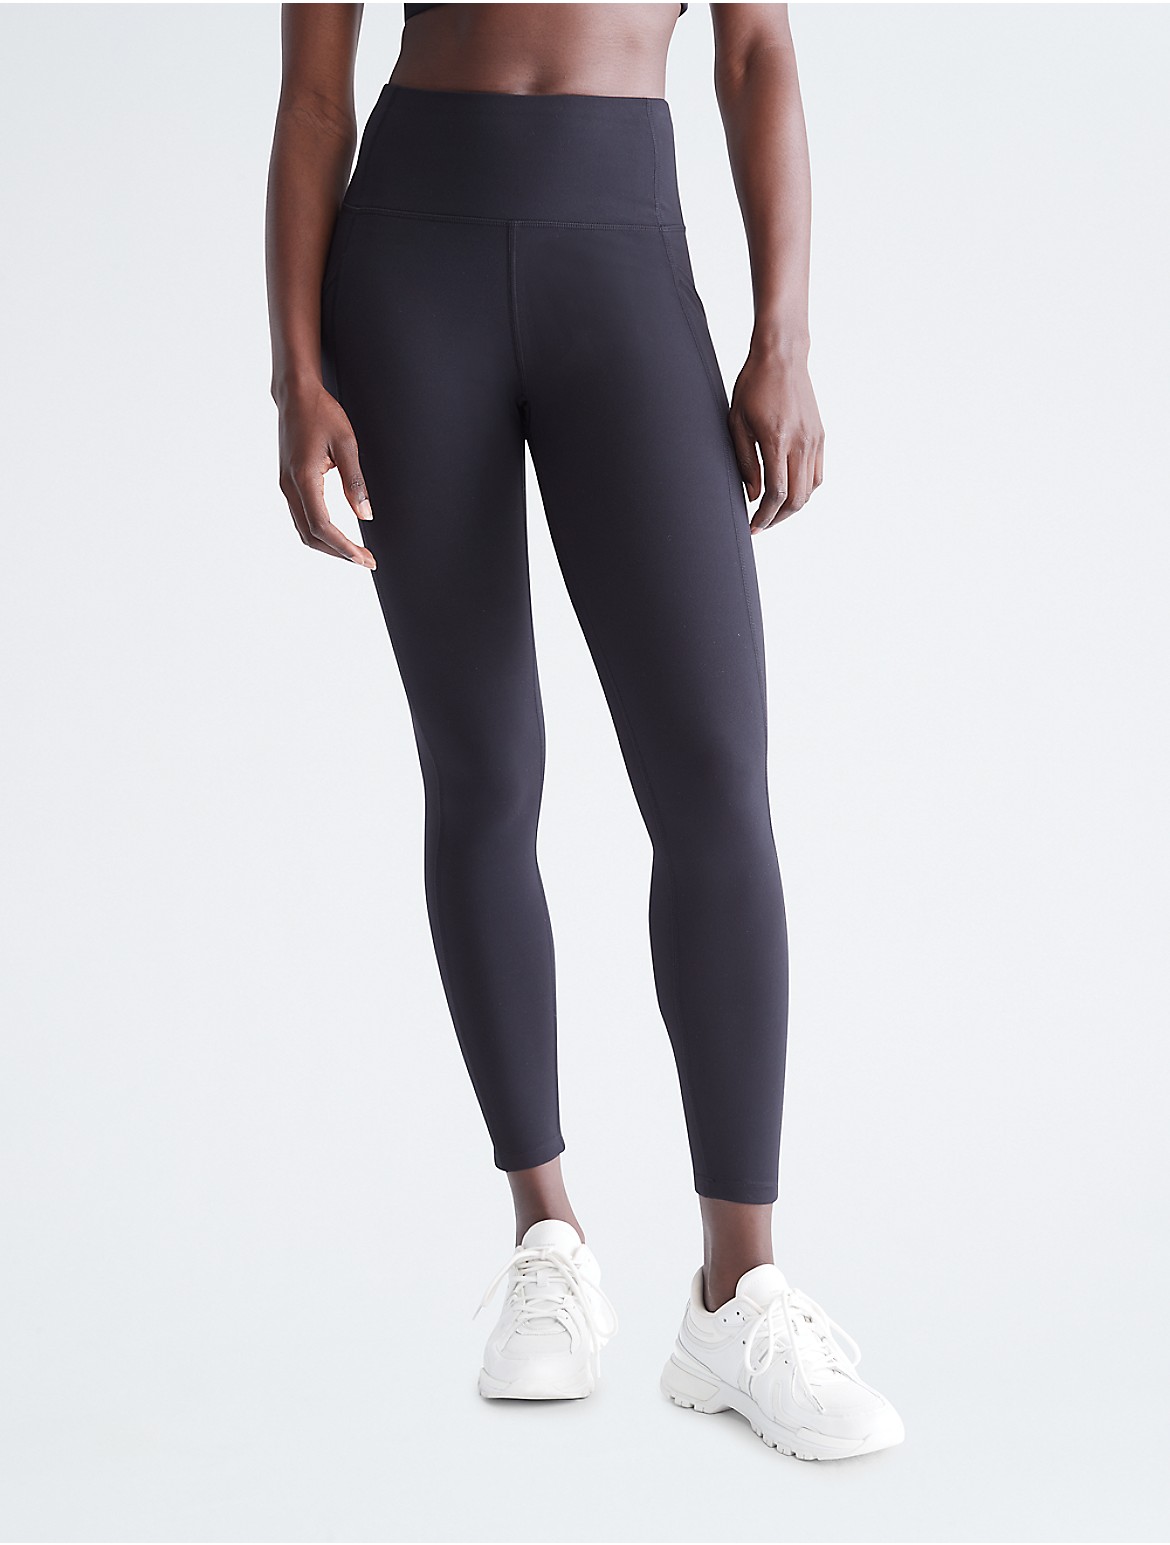 Calvin Klein Women's Performance Embrace Super High Waist Leggings - Black - XL